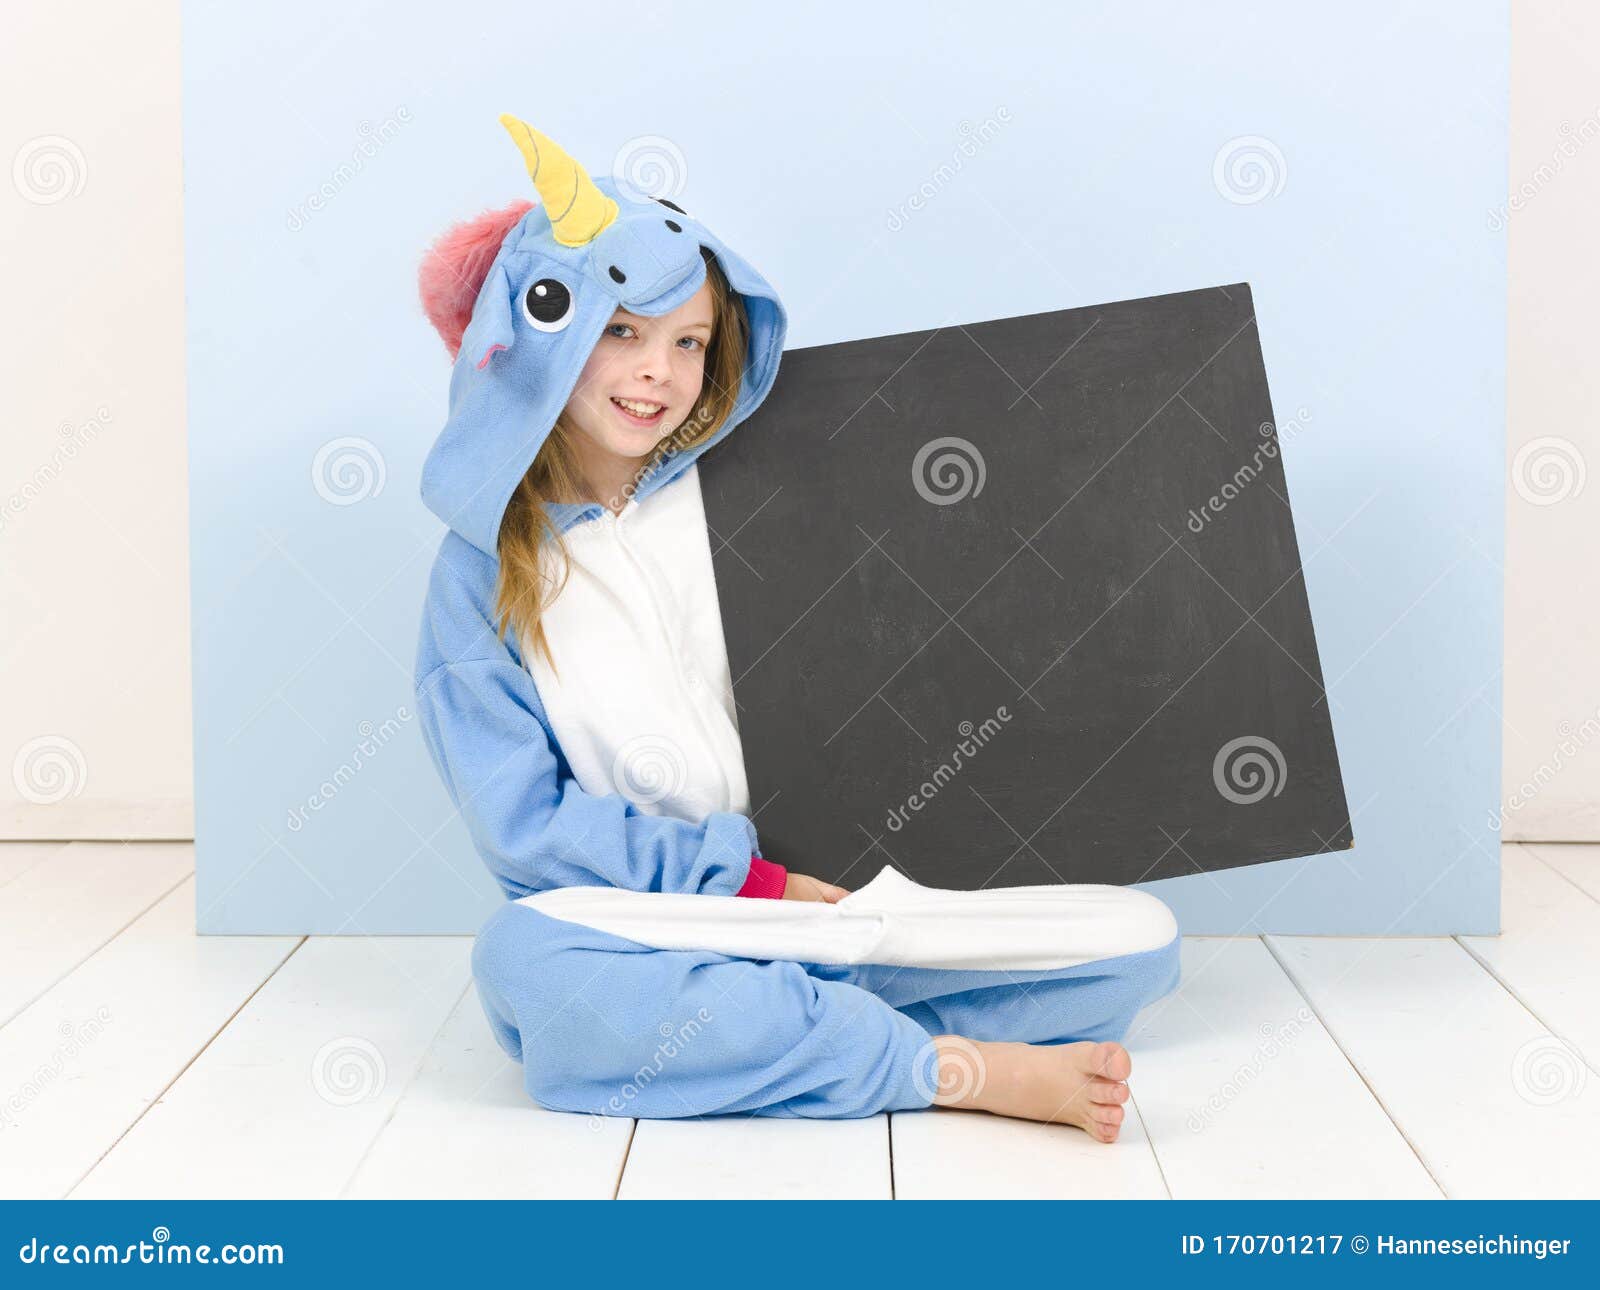 Blue Unicorn Costume - wide 5